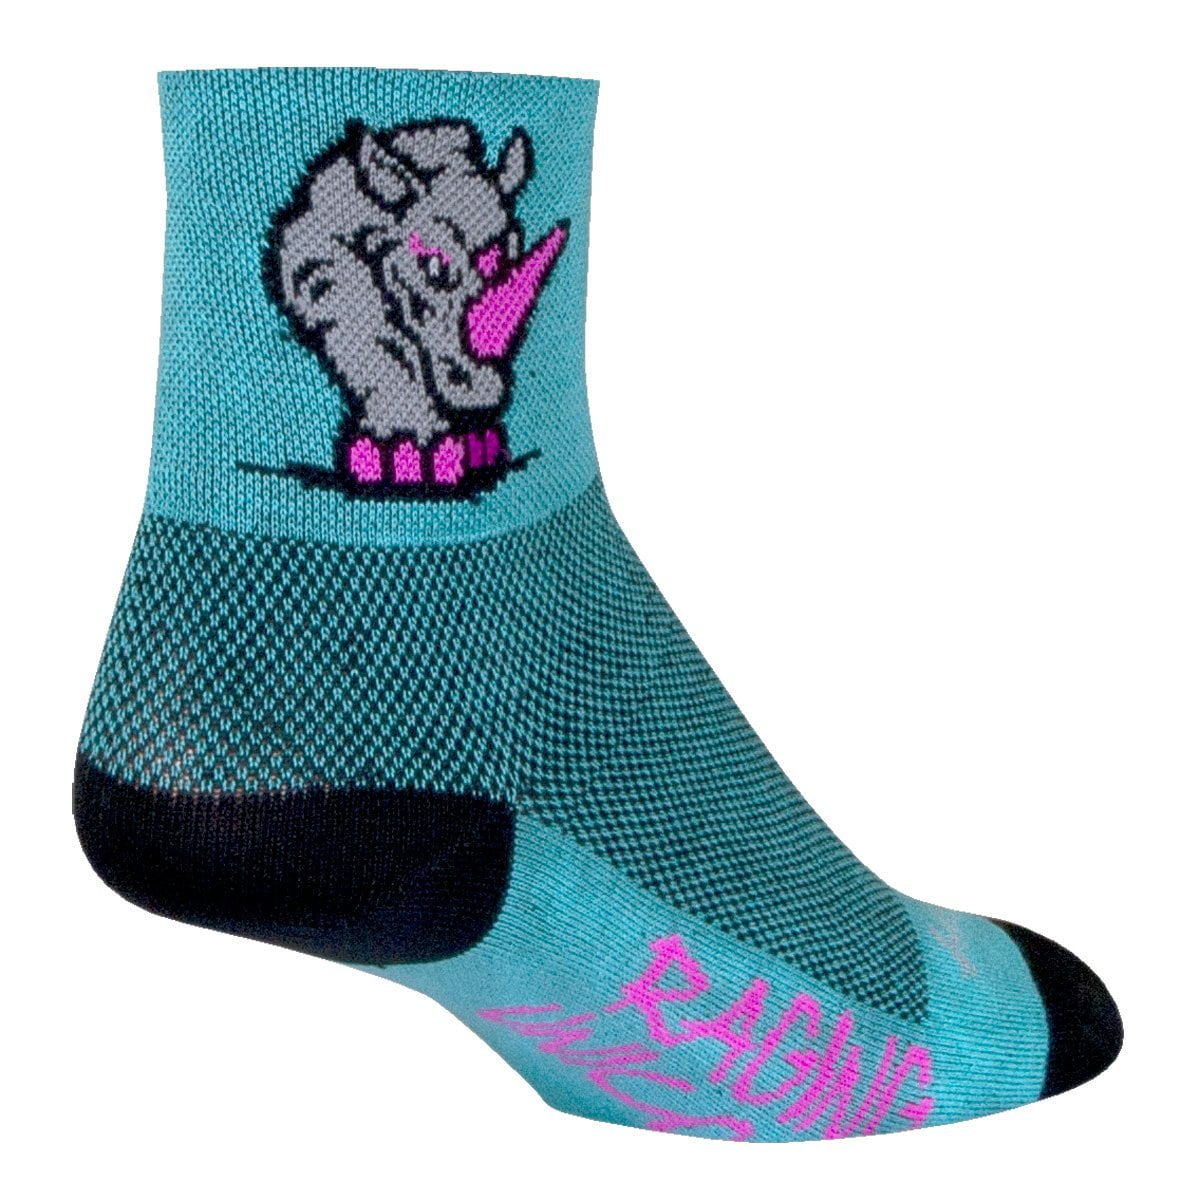 Small/Medium Black/White/Pink SockGuy Classic Udder Socks 3 inch 